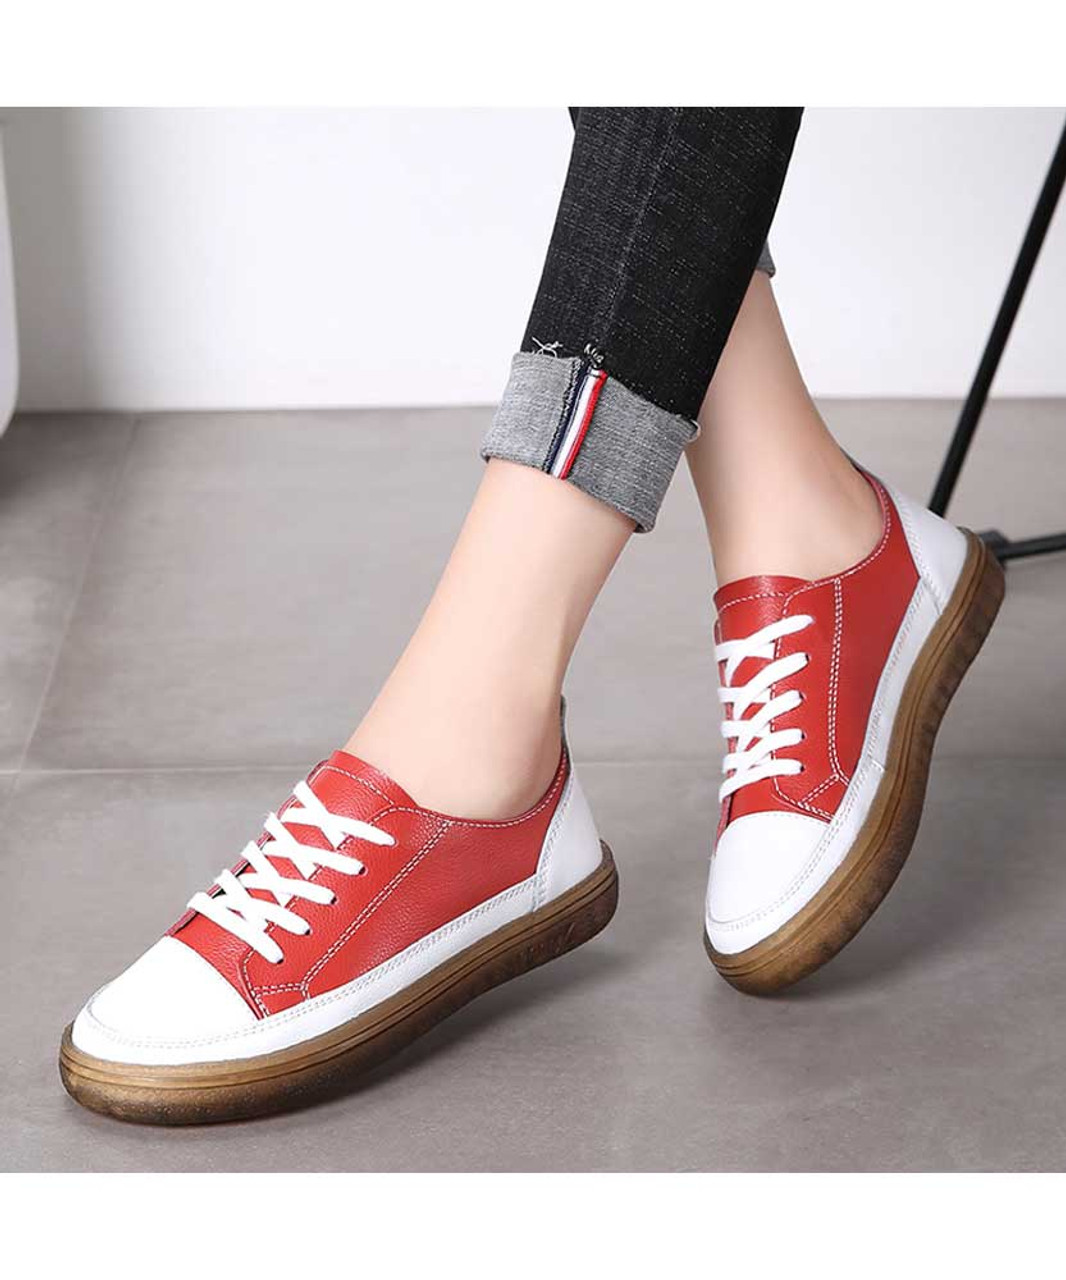 Red white sewed split leather shoe sneaker | Womens shoe sneakers ...